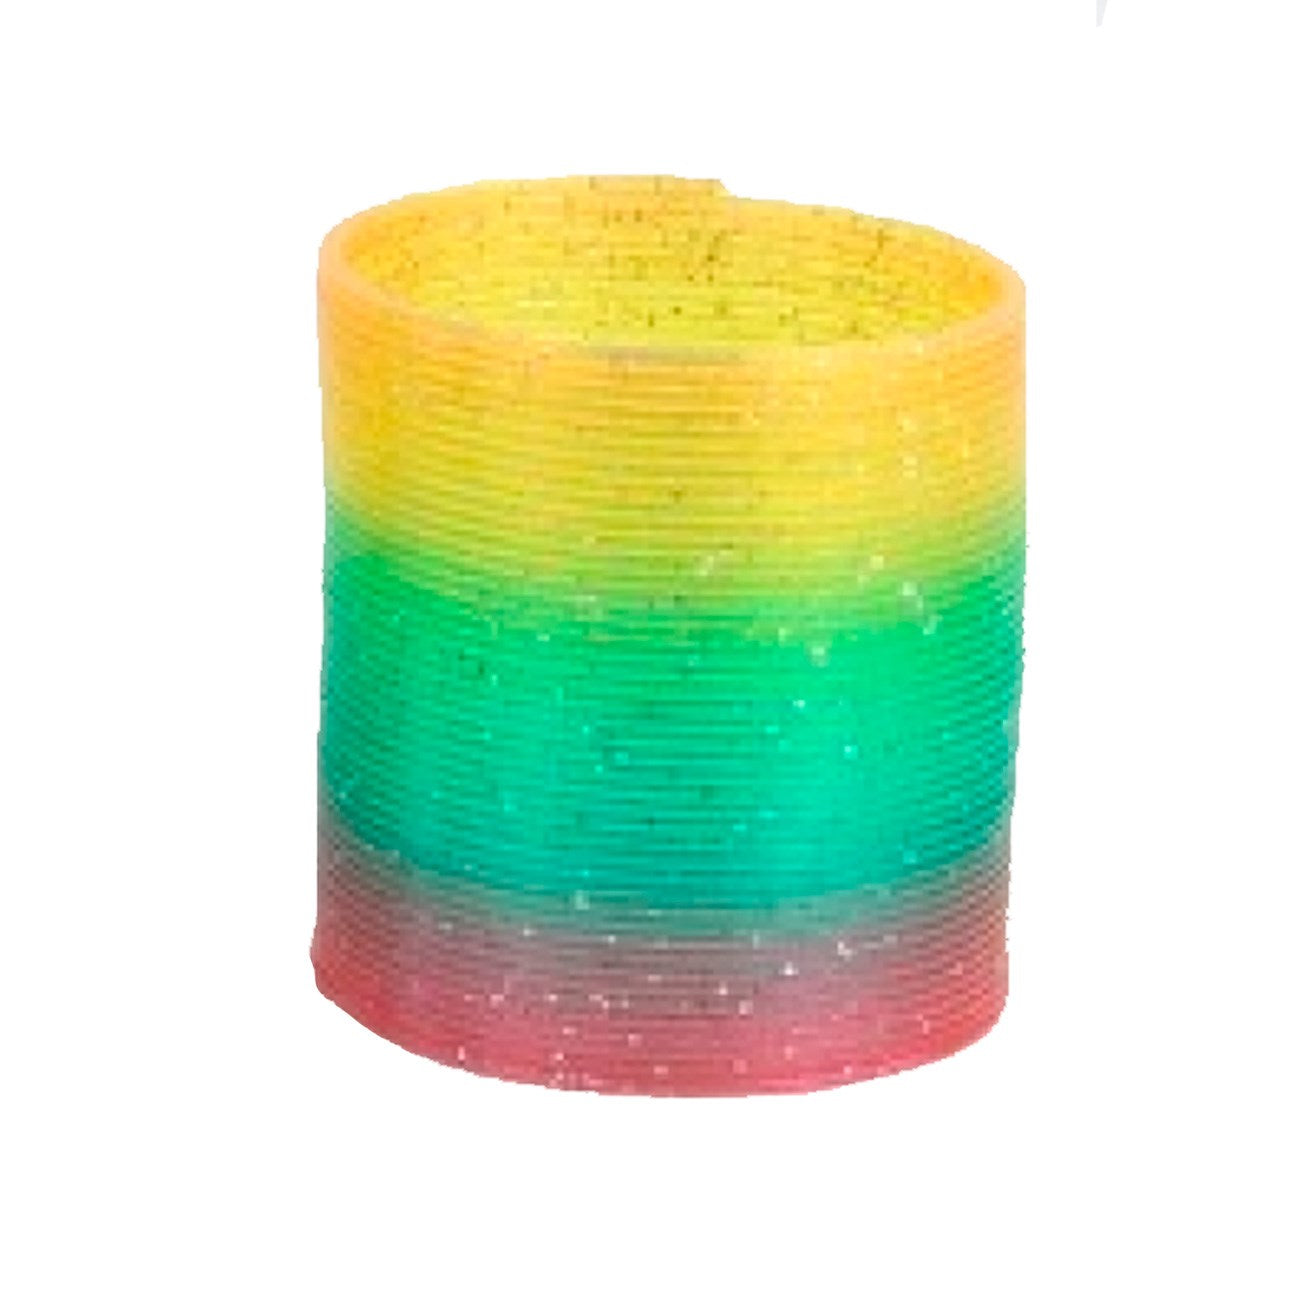 Pocket Money rainbow-colored spring with glitter 6.5 x 6.5 cm Cdu